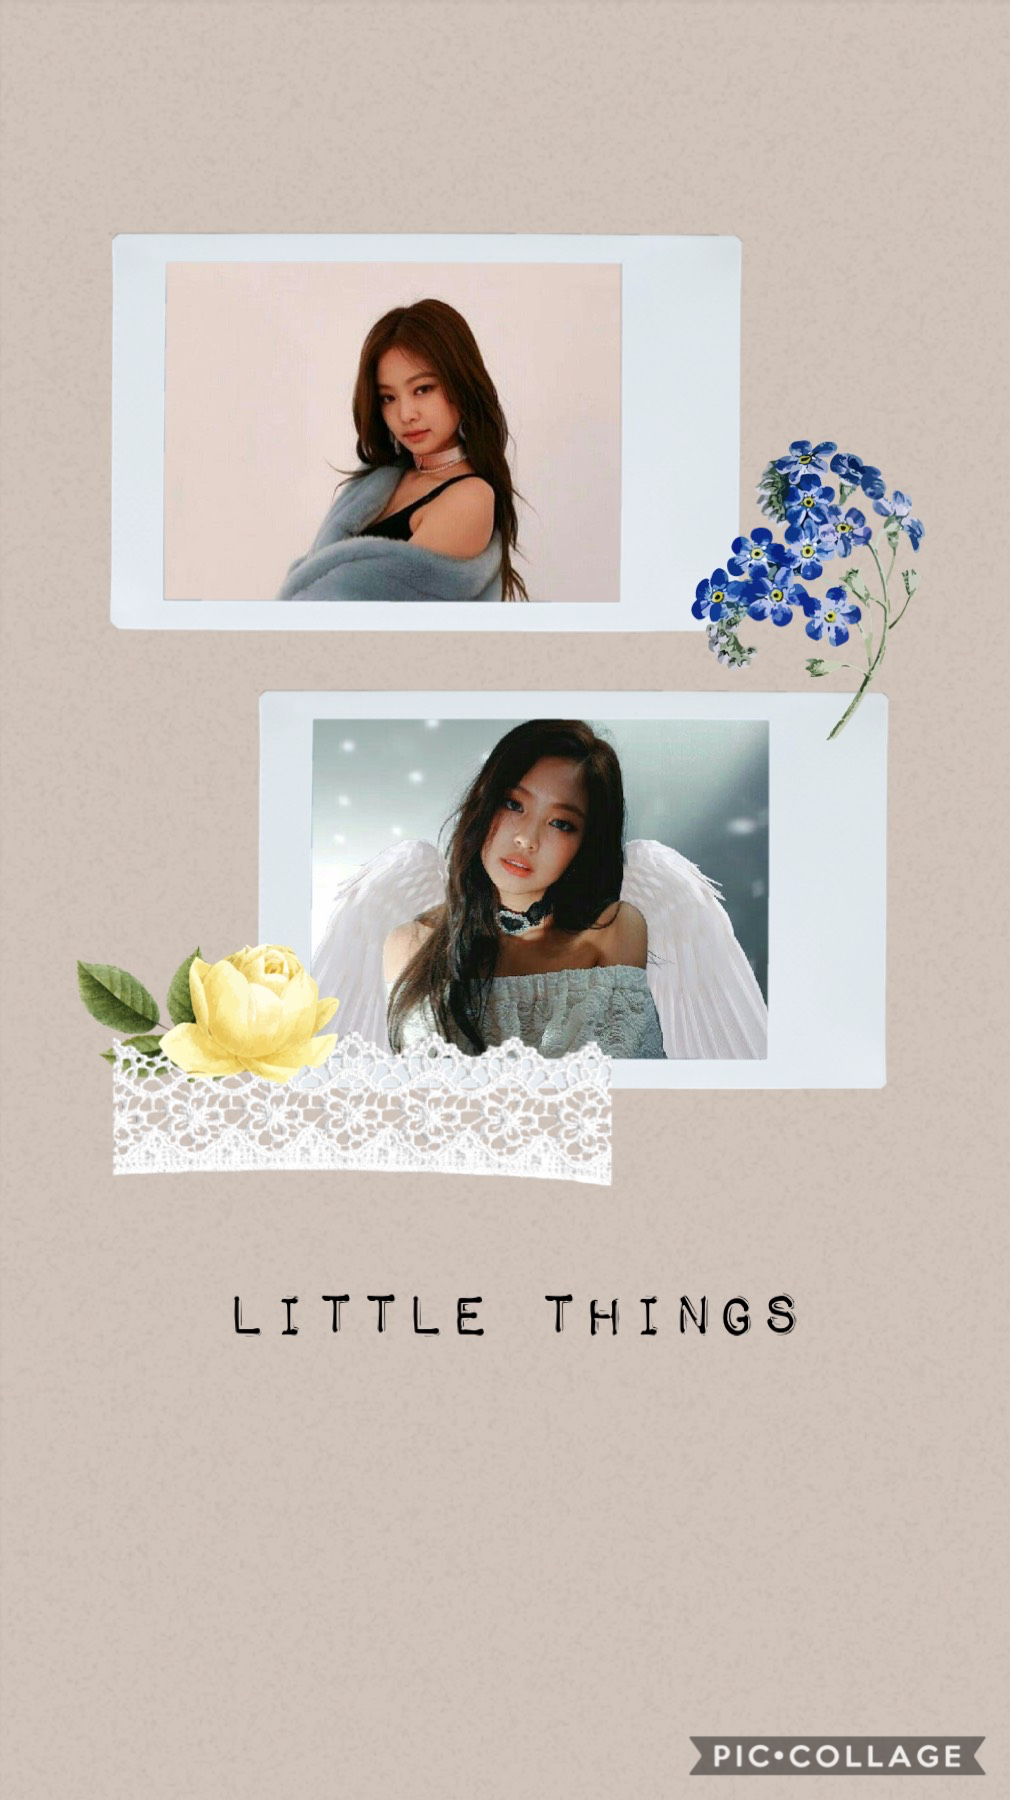 Little things Jennie ✨
Artist:Jennie 
Group:BLACKPINK 